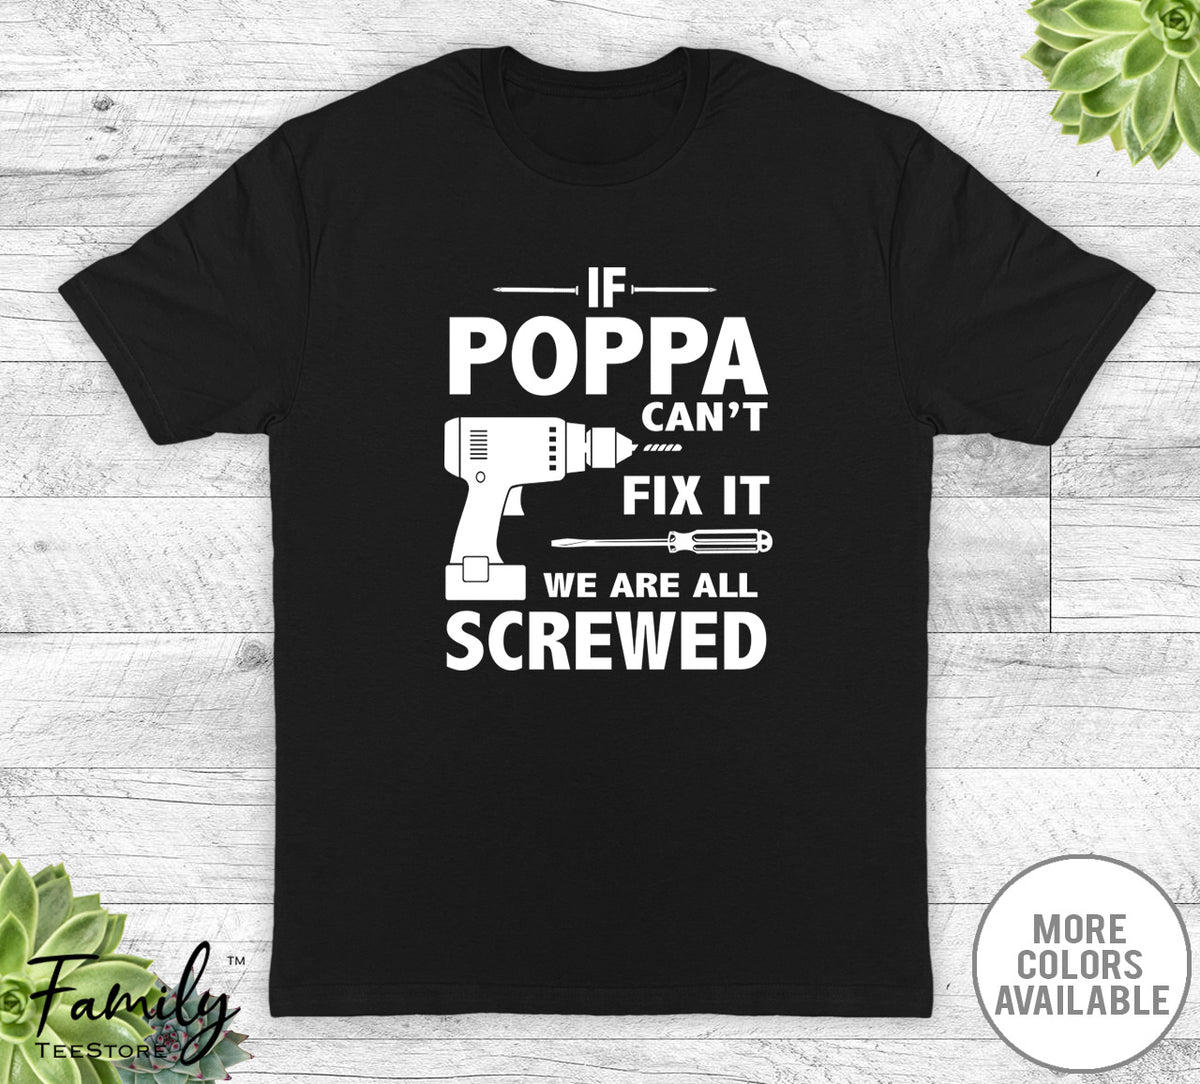 If Poppa Can't Fix It We Are All Screwed - Unisex T-shirt - Poppa Shirt - Poppa Gift - familyteeprints